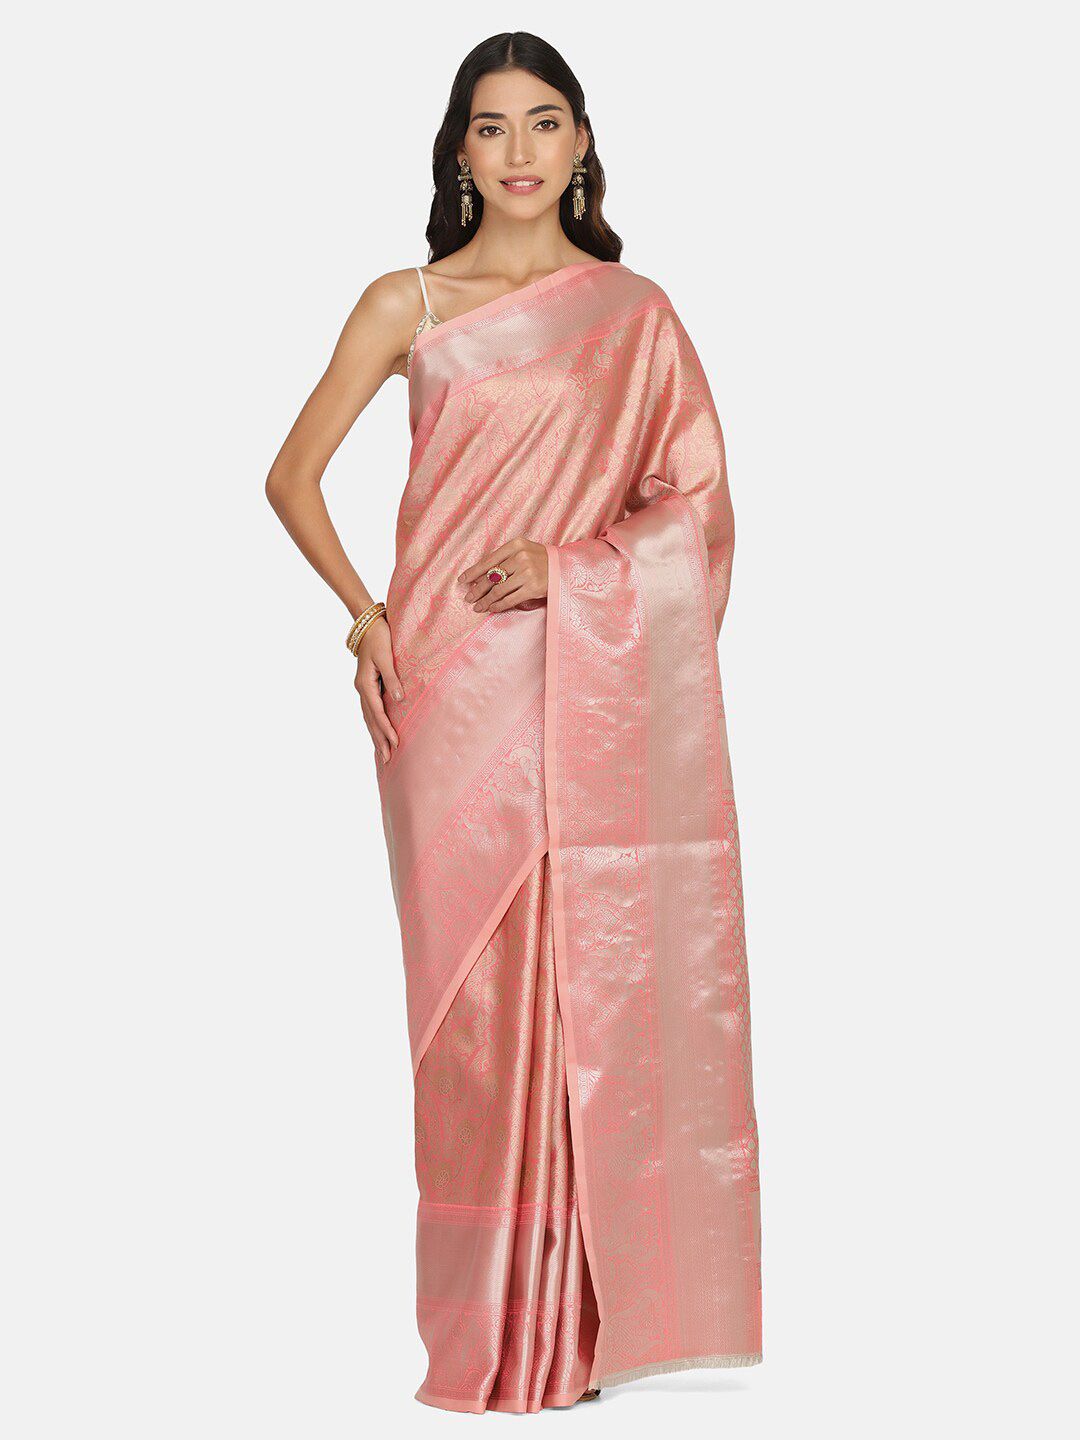 BOMBAY SELECTIONS Pink & Silver-Toned Woven Design Zari Pure Silk Kanjeevaram Saree Price in India